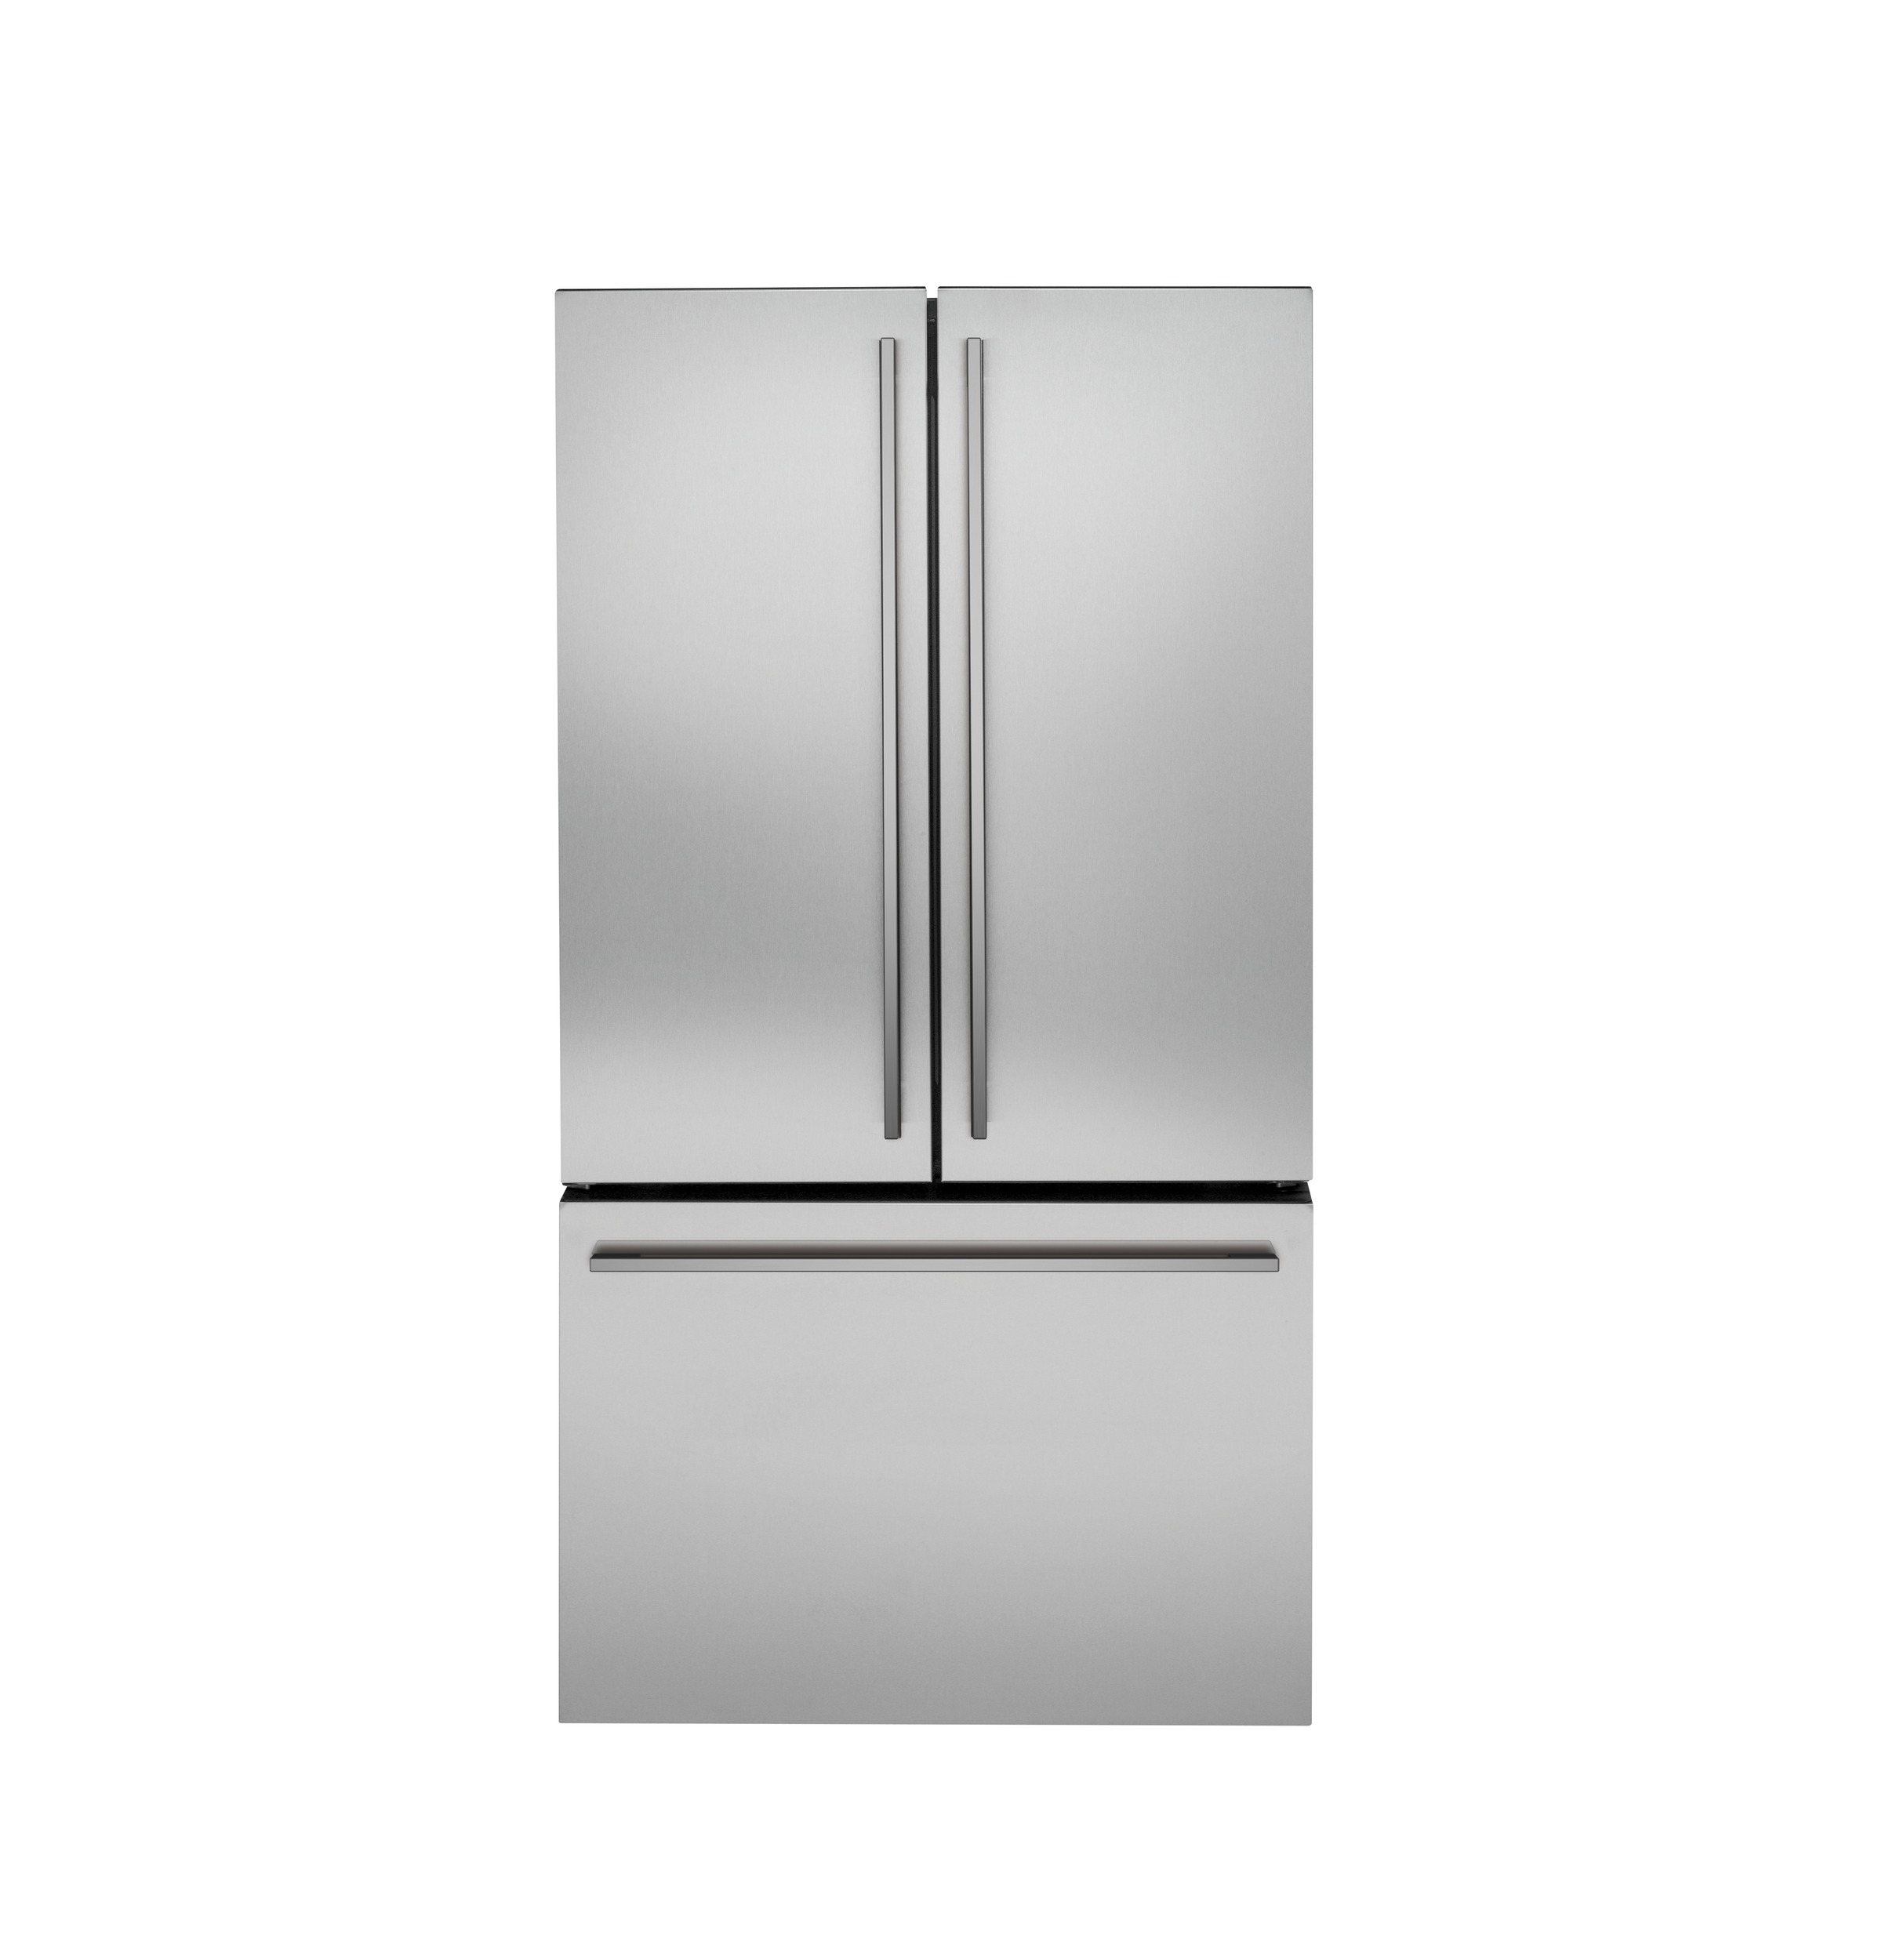 Monogram ENERGY STAR® 23.1 Cu. Ft. Counter-Depth French-Door Refrigerator